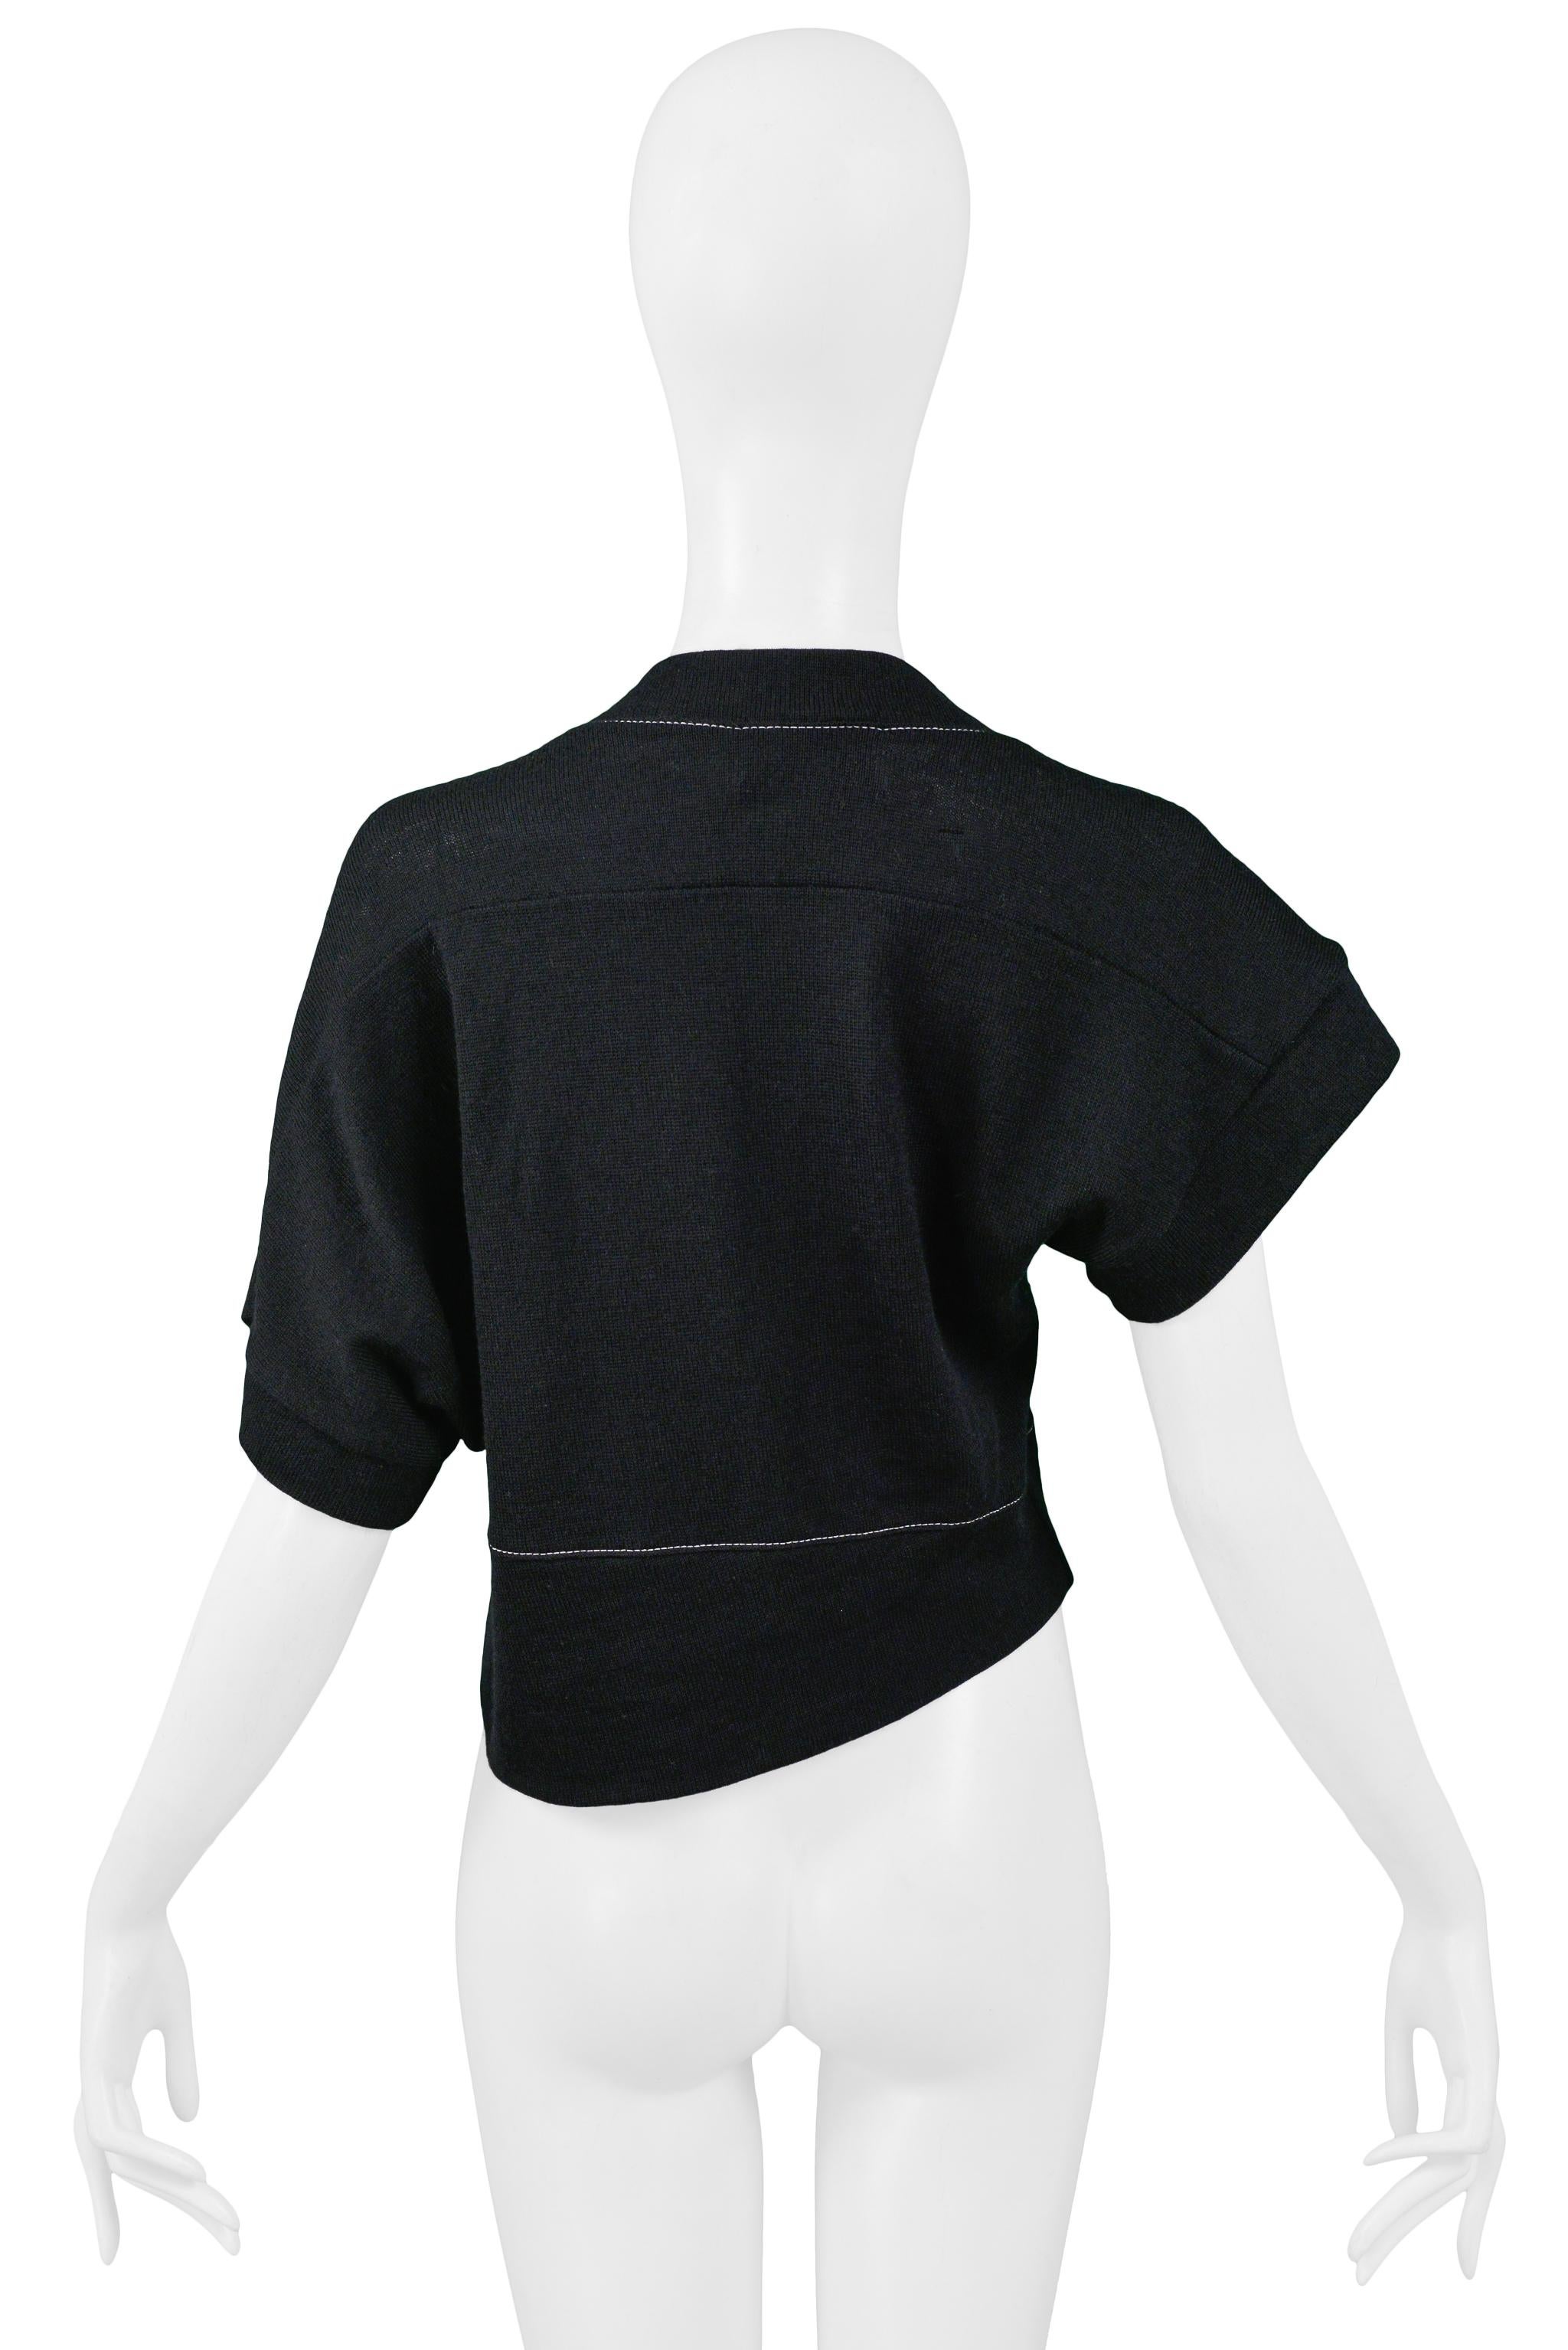 black sweater with white stitching